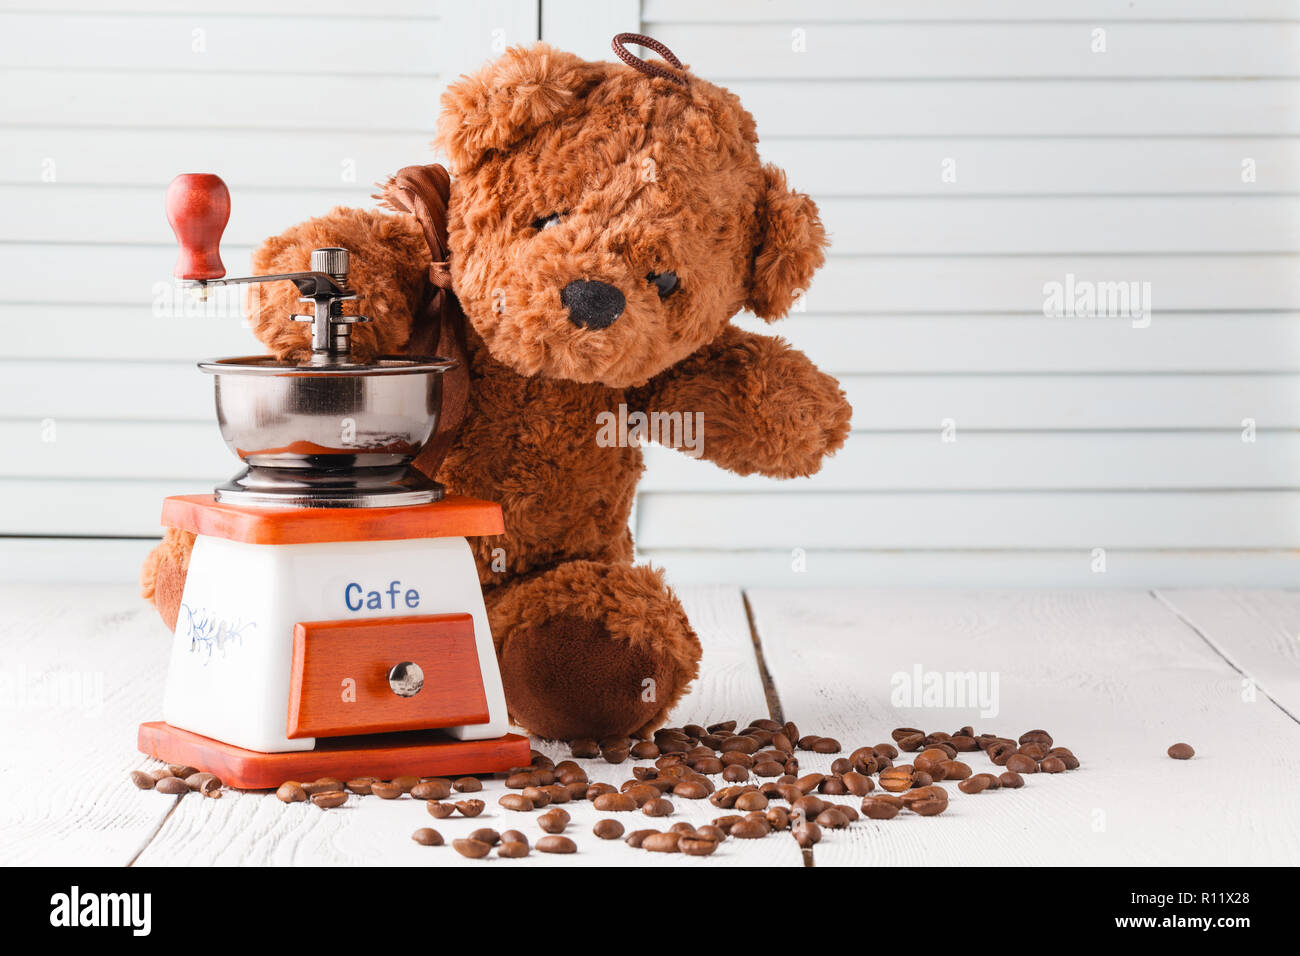 Good morning with teddy bear Stock Photo - Alamy